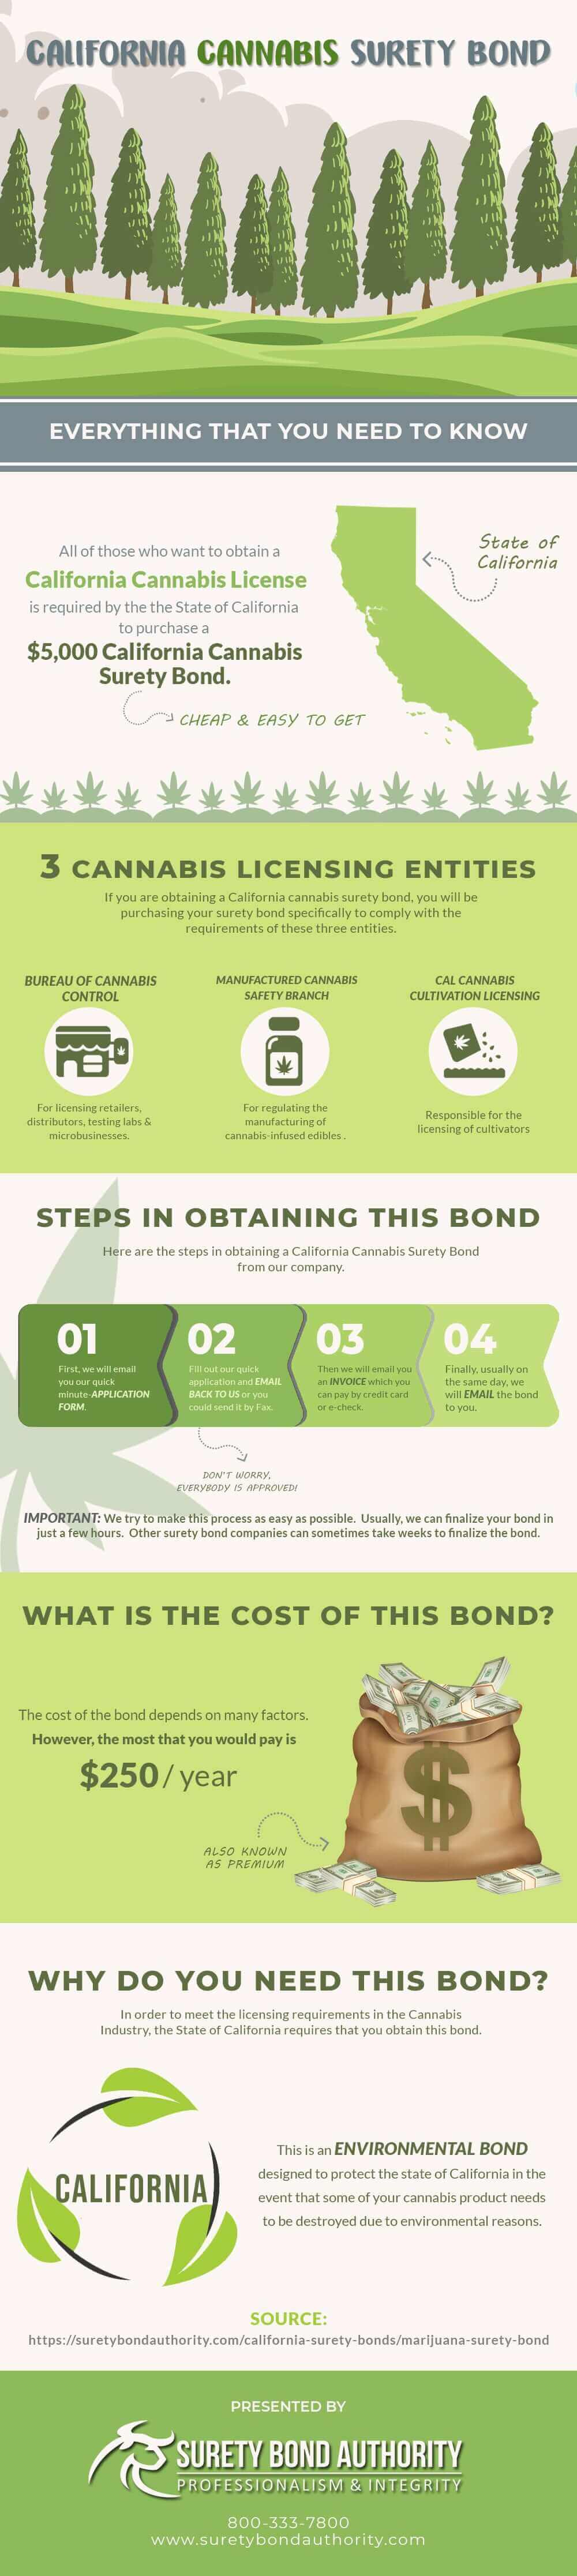 California Cannabis Surety Bond